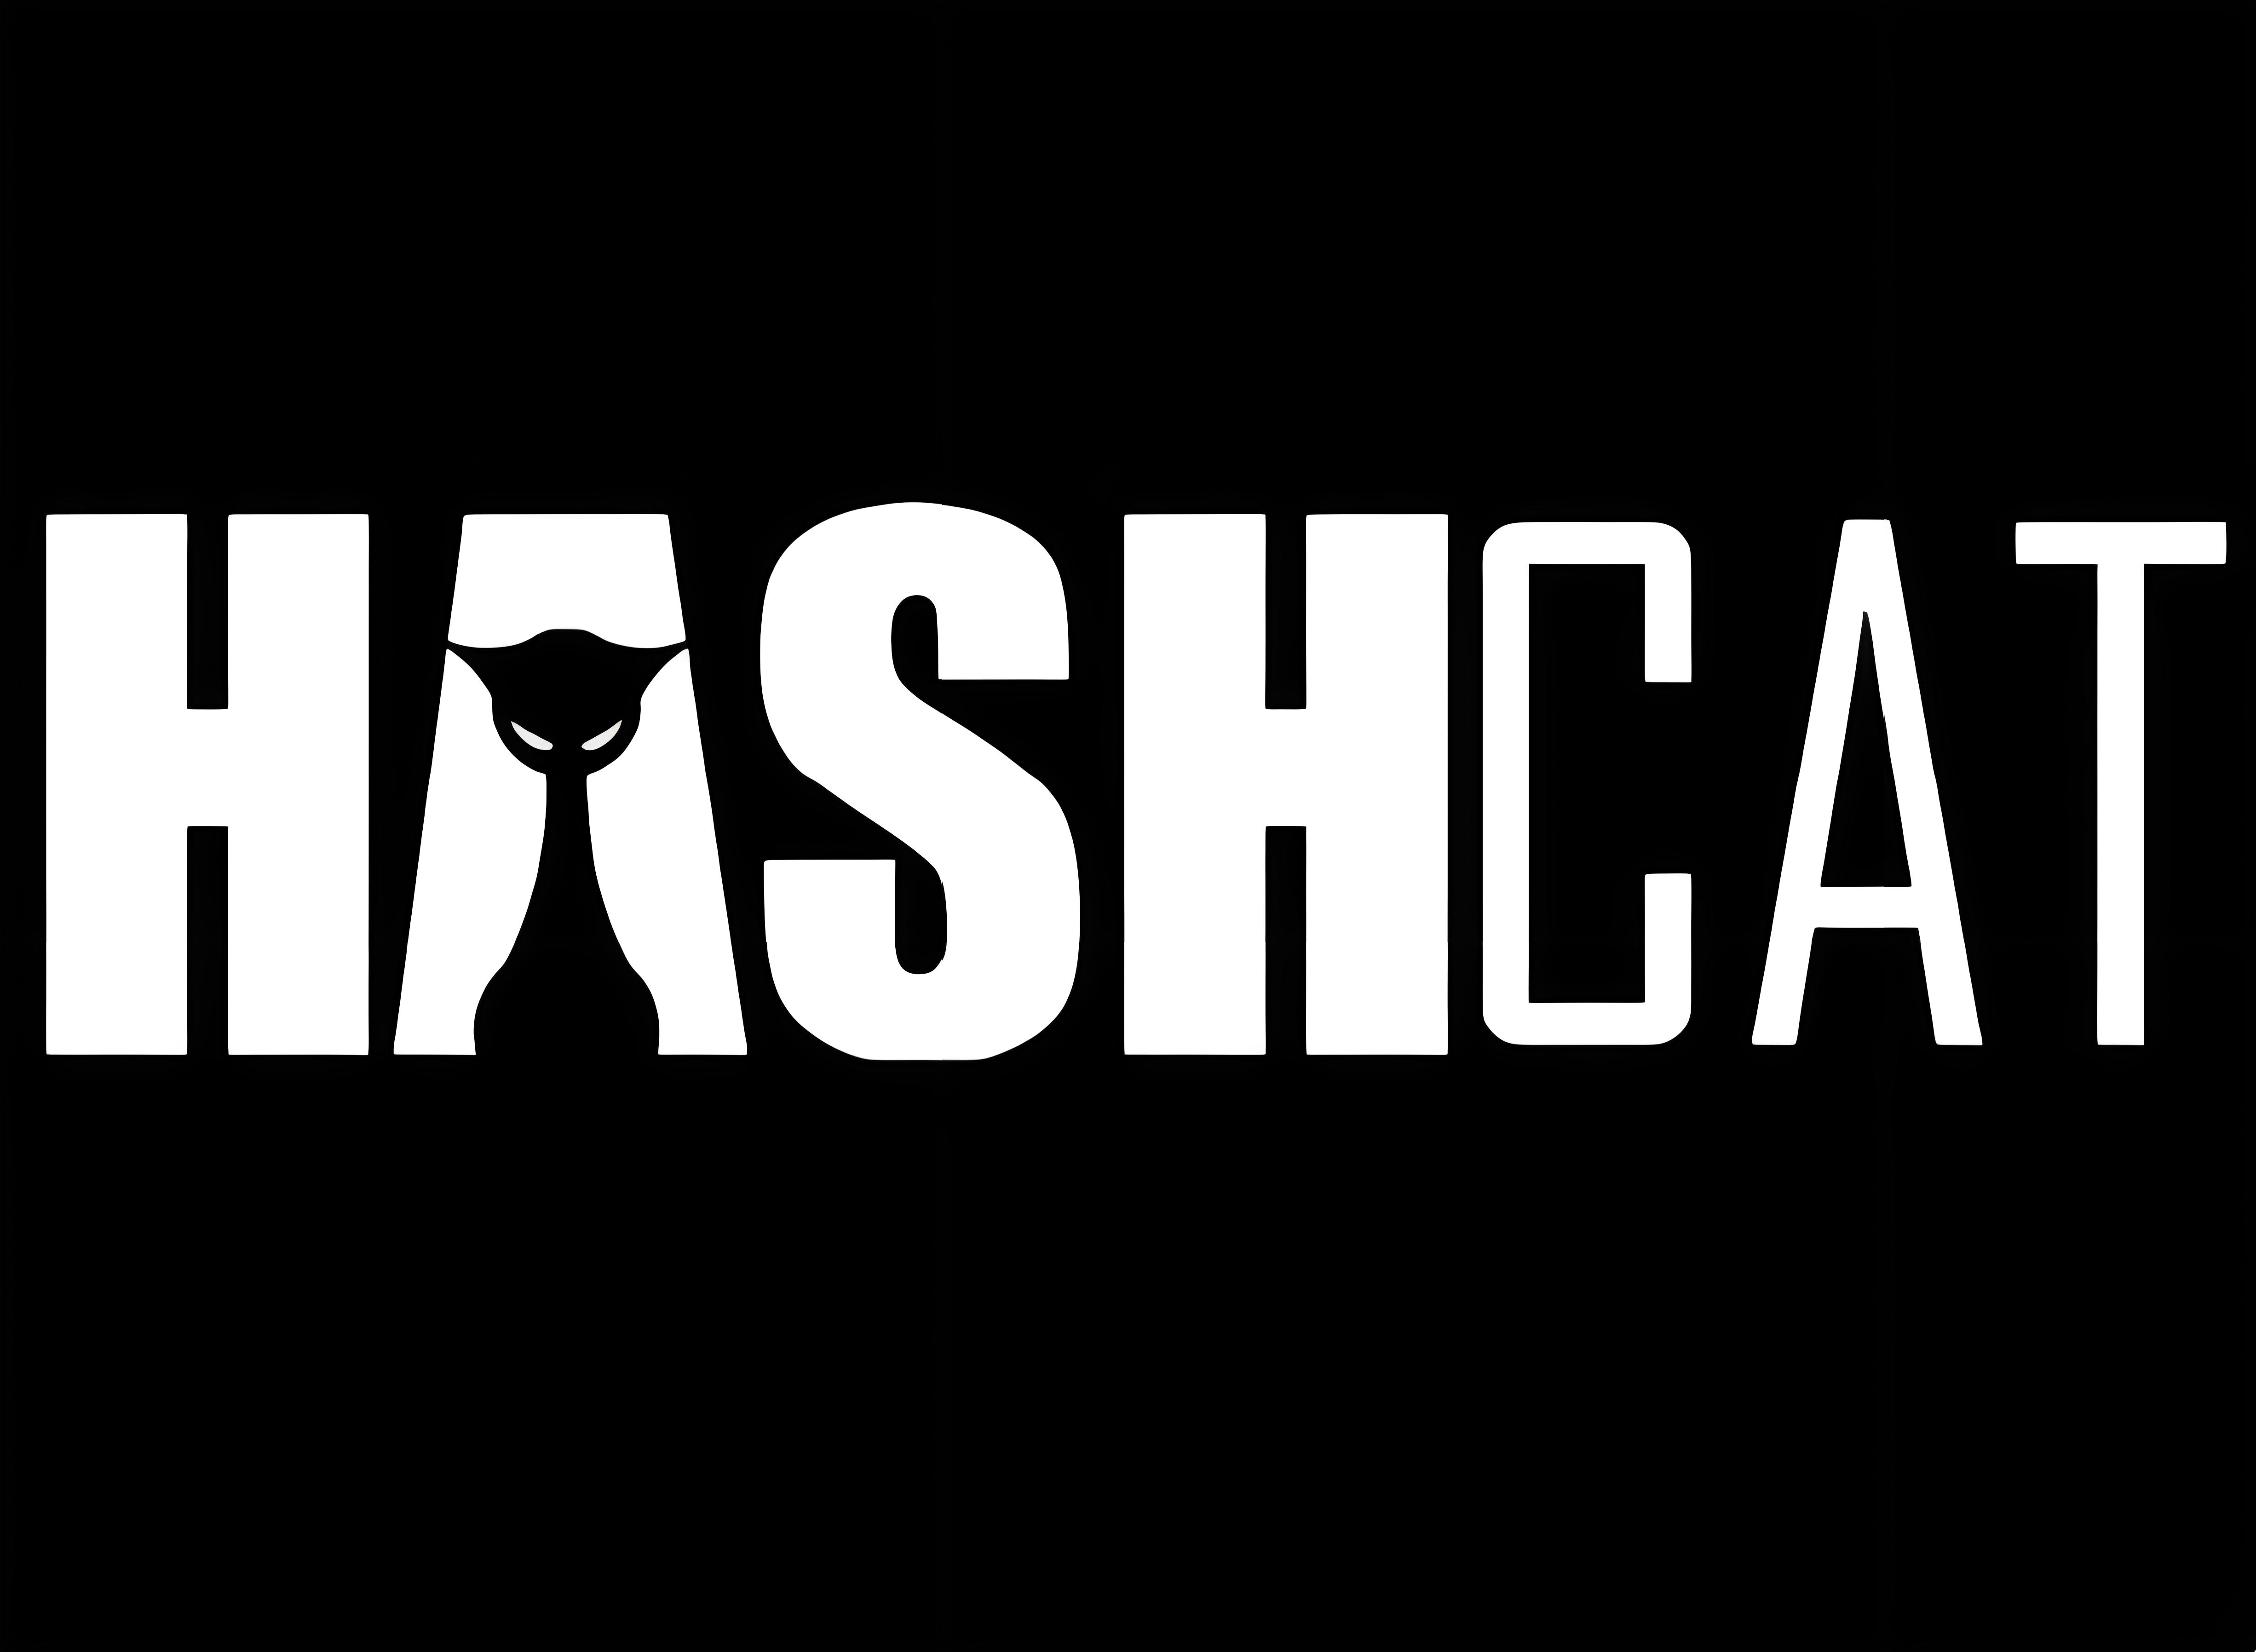 Hashcat安装与使用 一、简介 World's fastest password cracker世界上最快的密码破解器 项目地址：https://github.com/hashcat/hashcat Hashcat的官网是Hashcat.net ,点击进去后会有两个下载选项，我们选择hashca